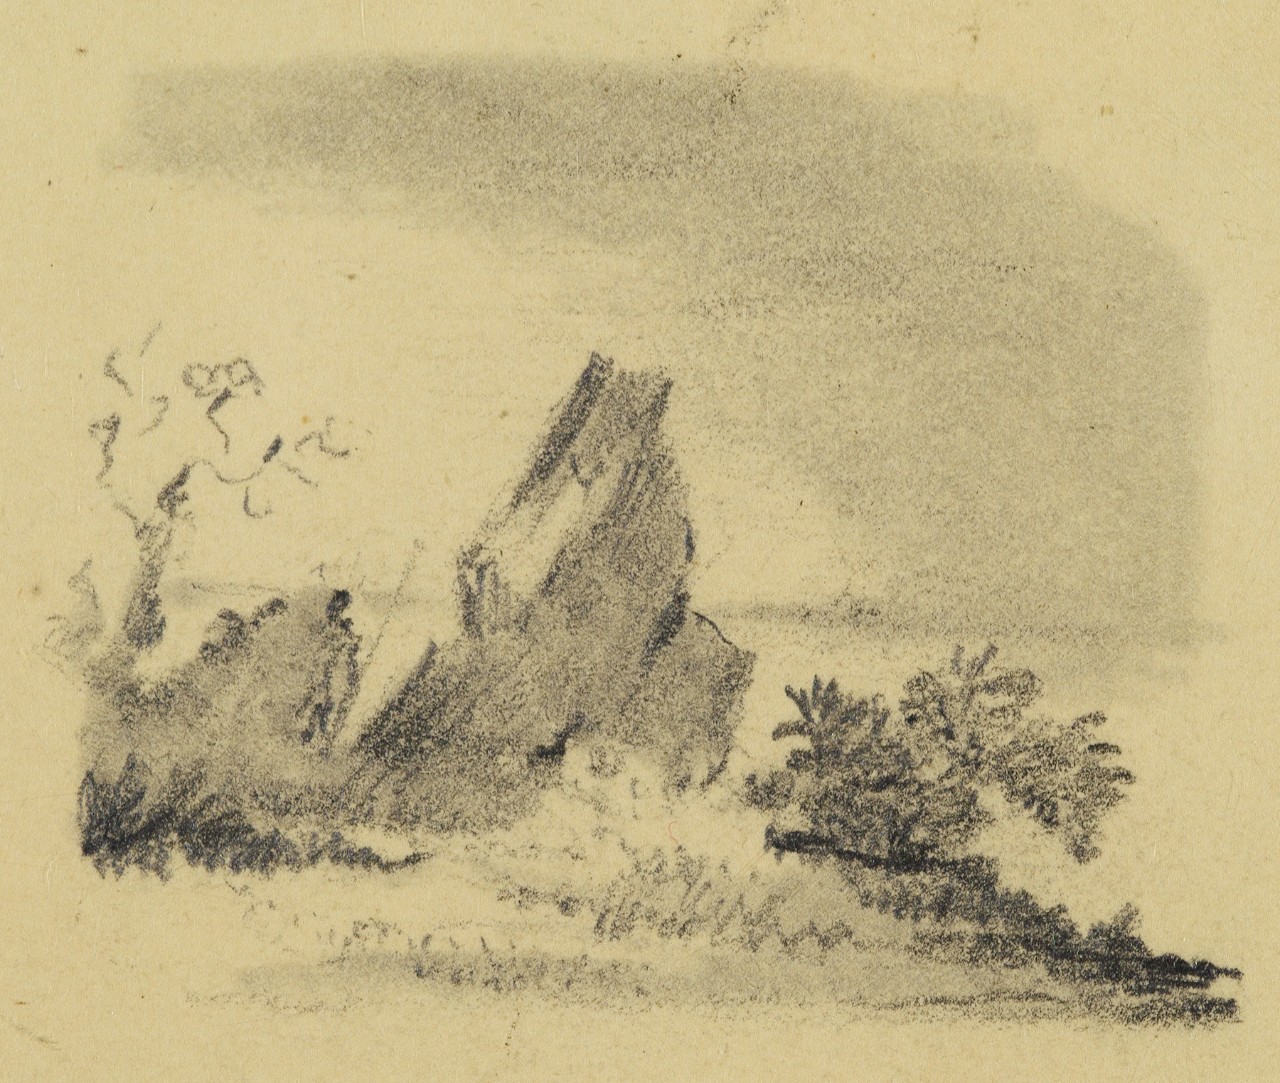 Landscape of a large rock